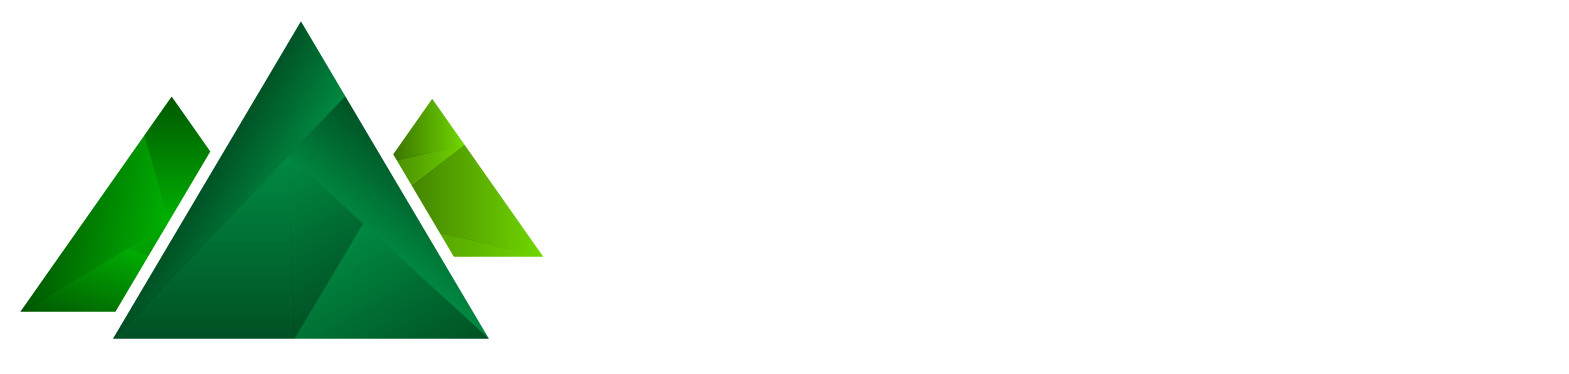 Make Travel logo